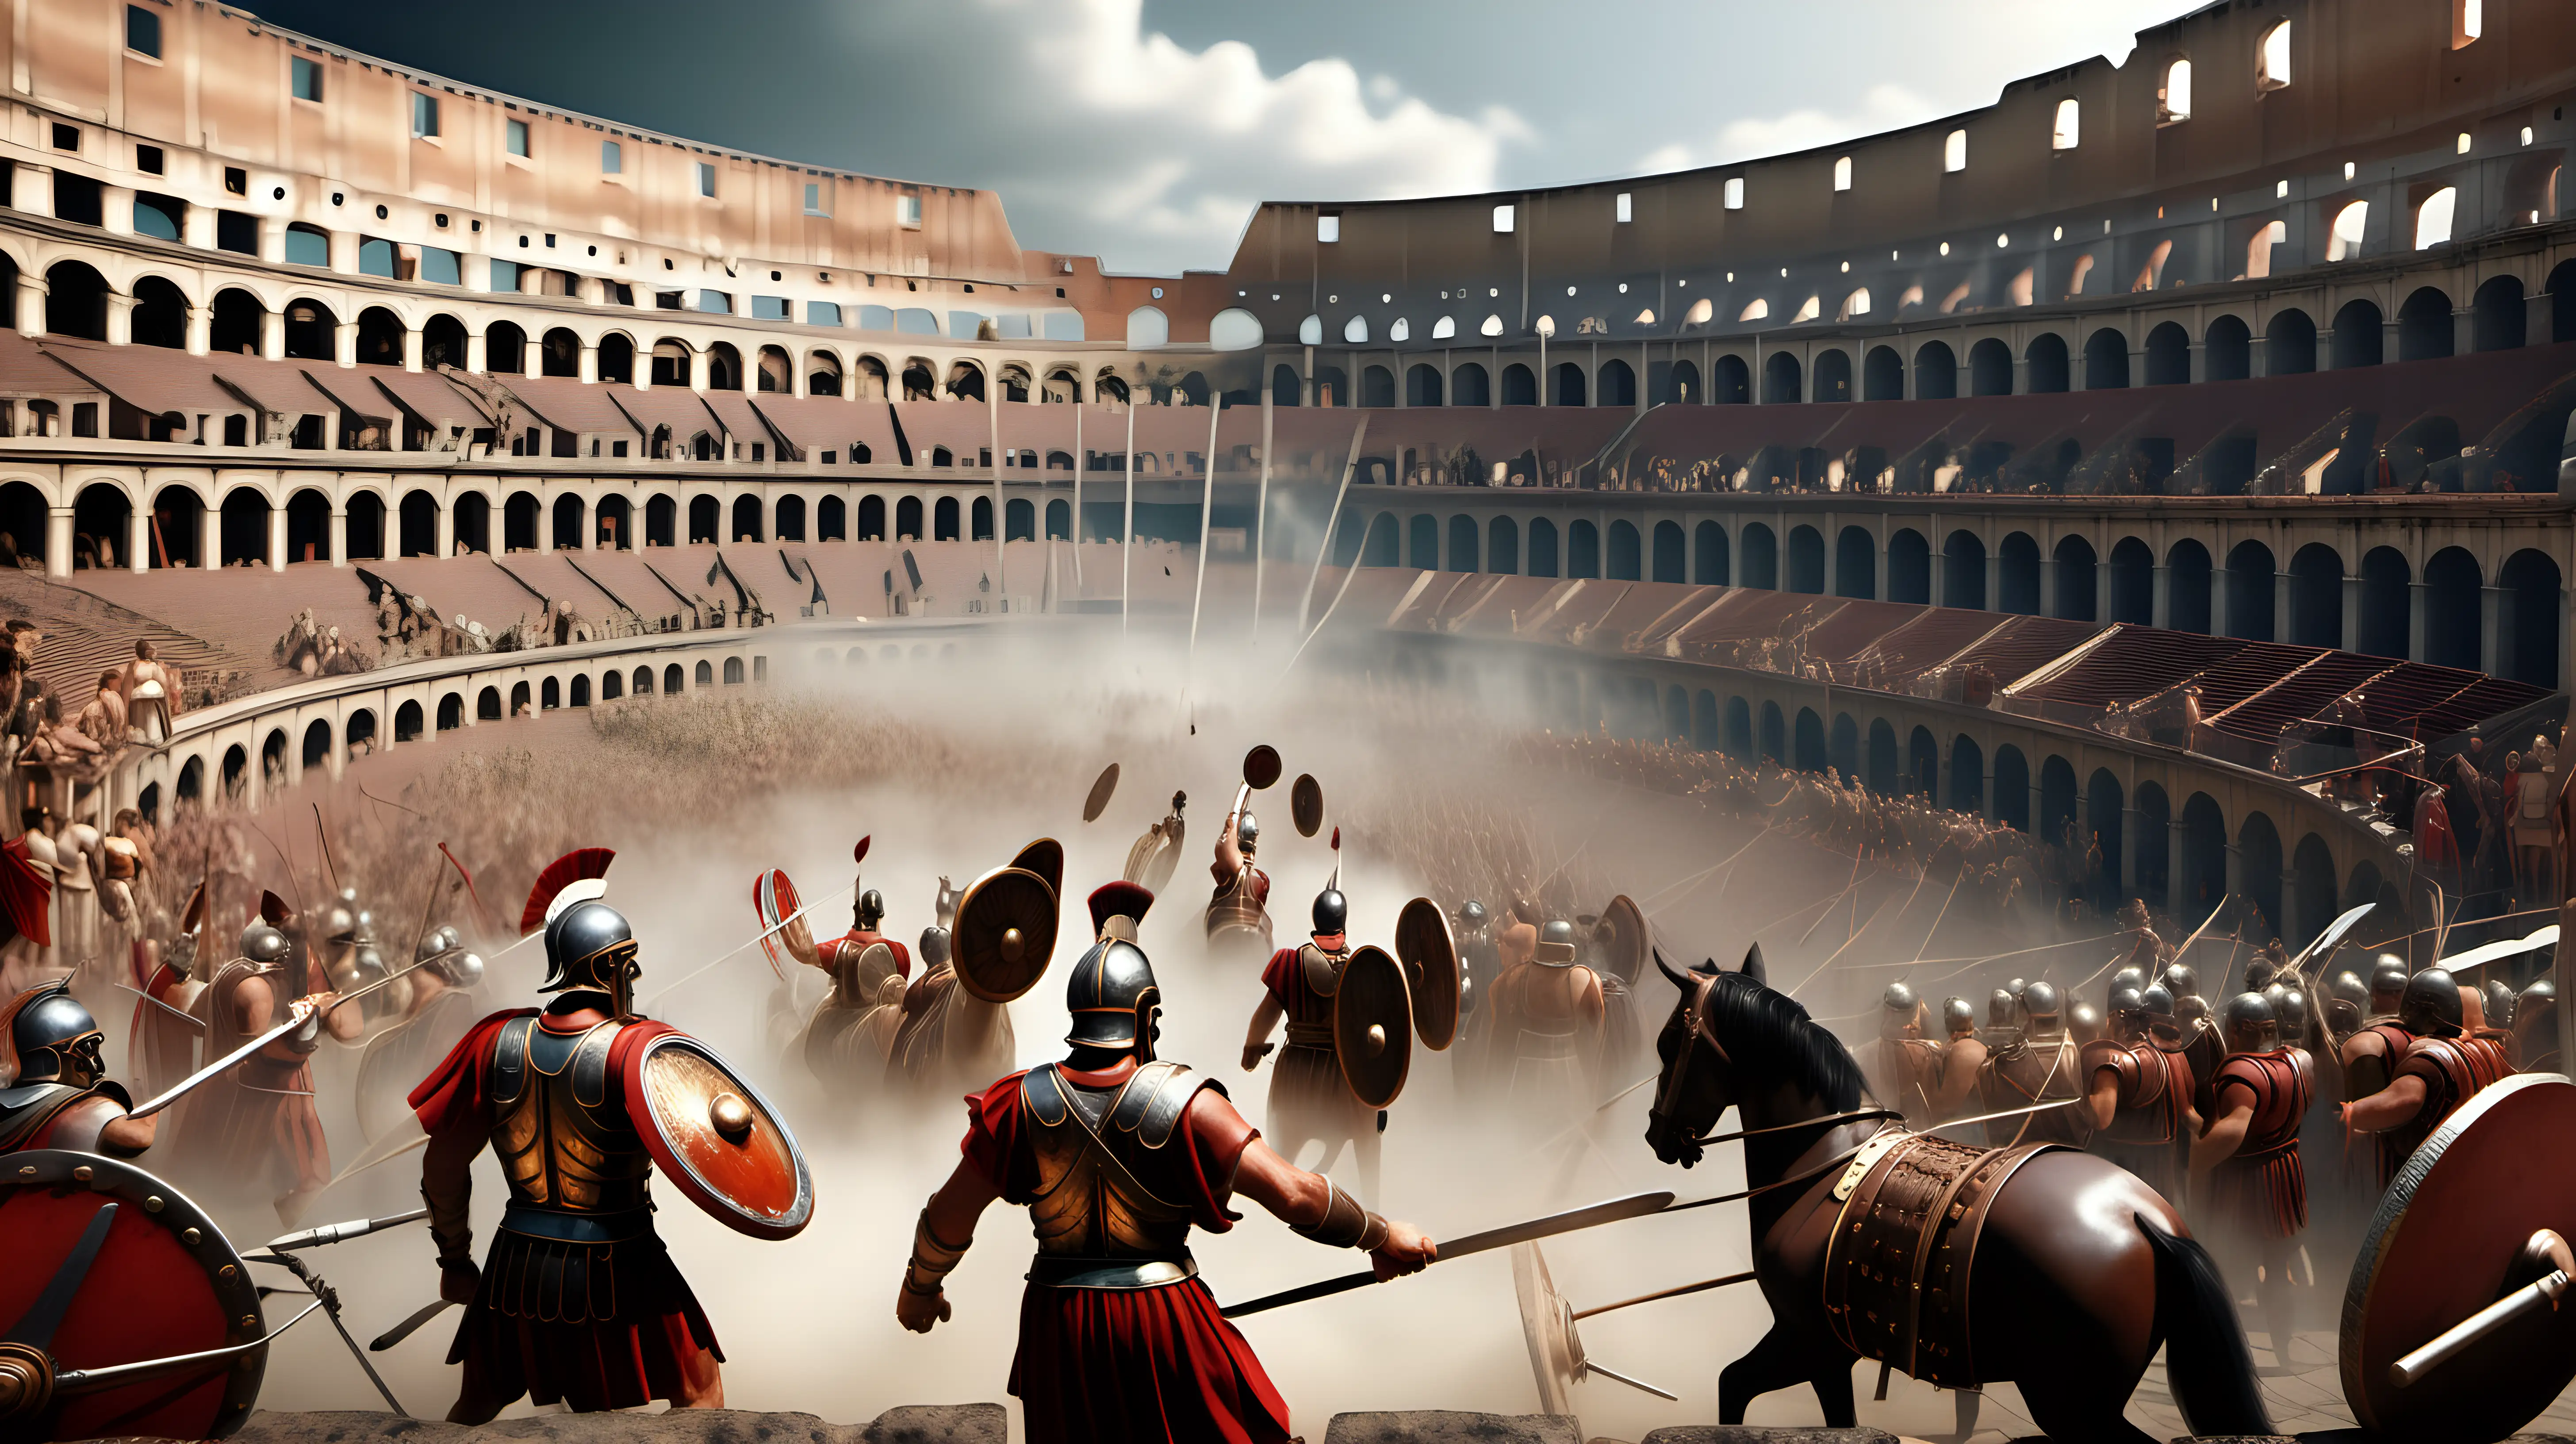  Battle scene in ancient roman colosseum. Detailed scene, Roman gladiators and legionnaires, war machines (horse-drawn chariots